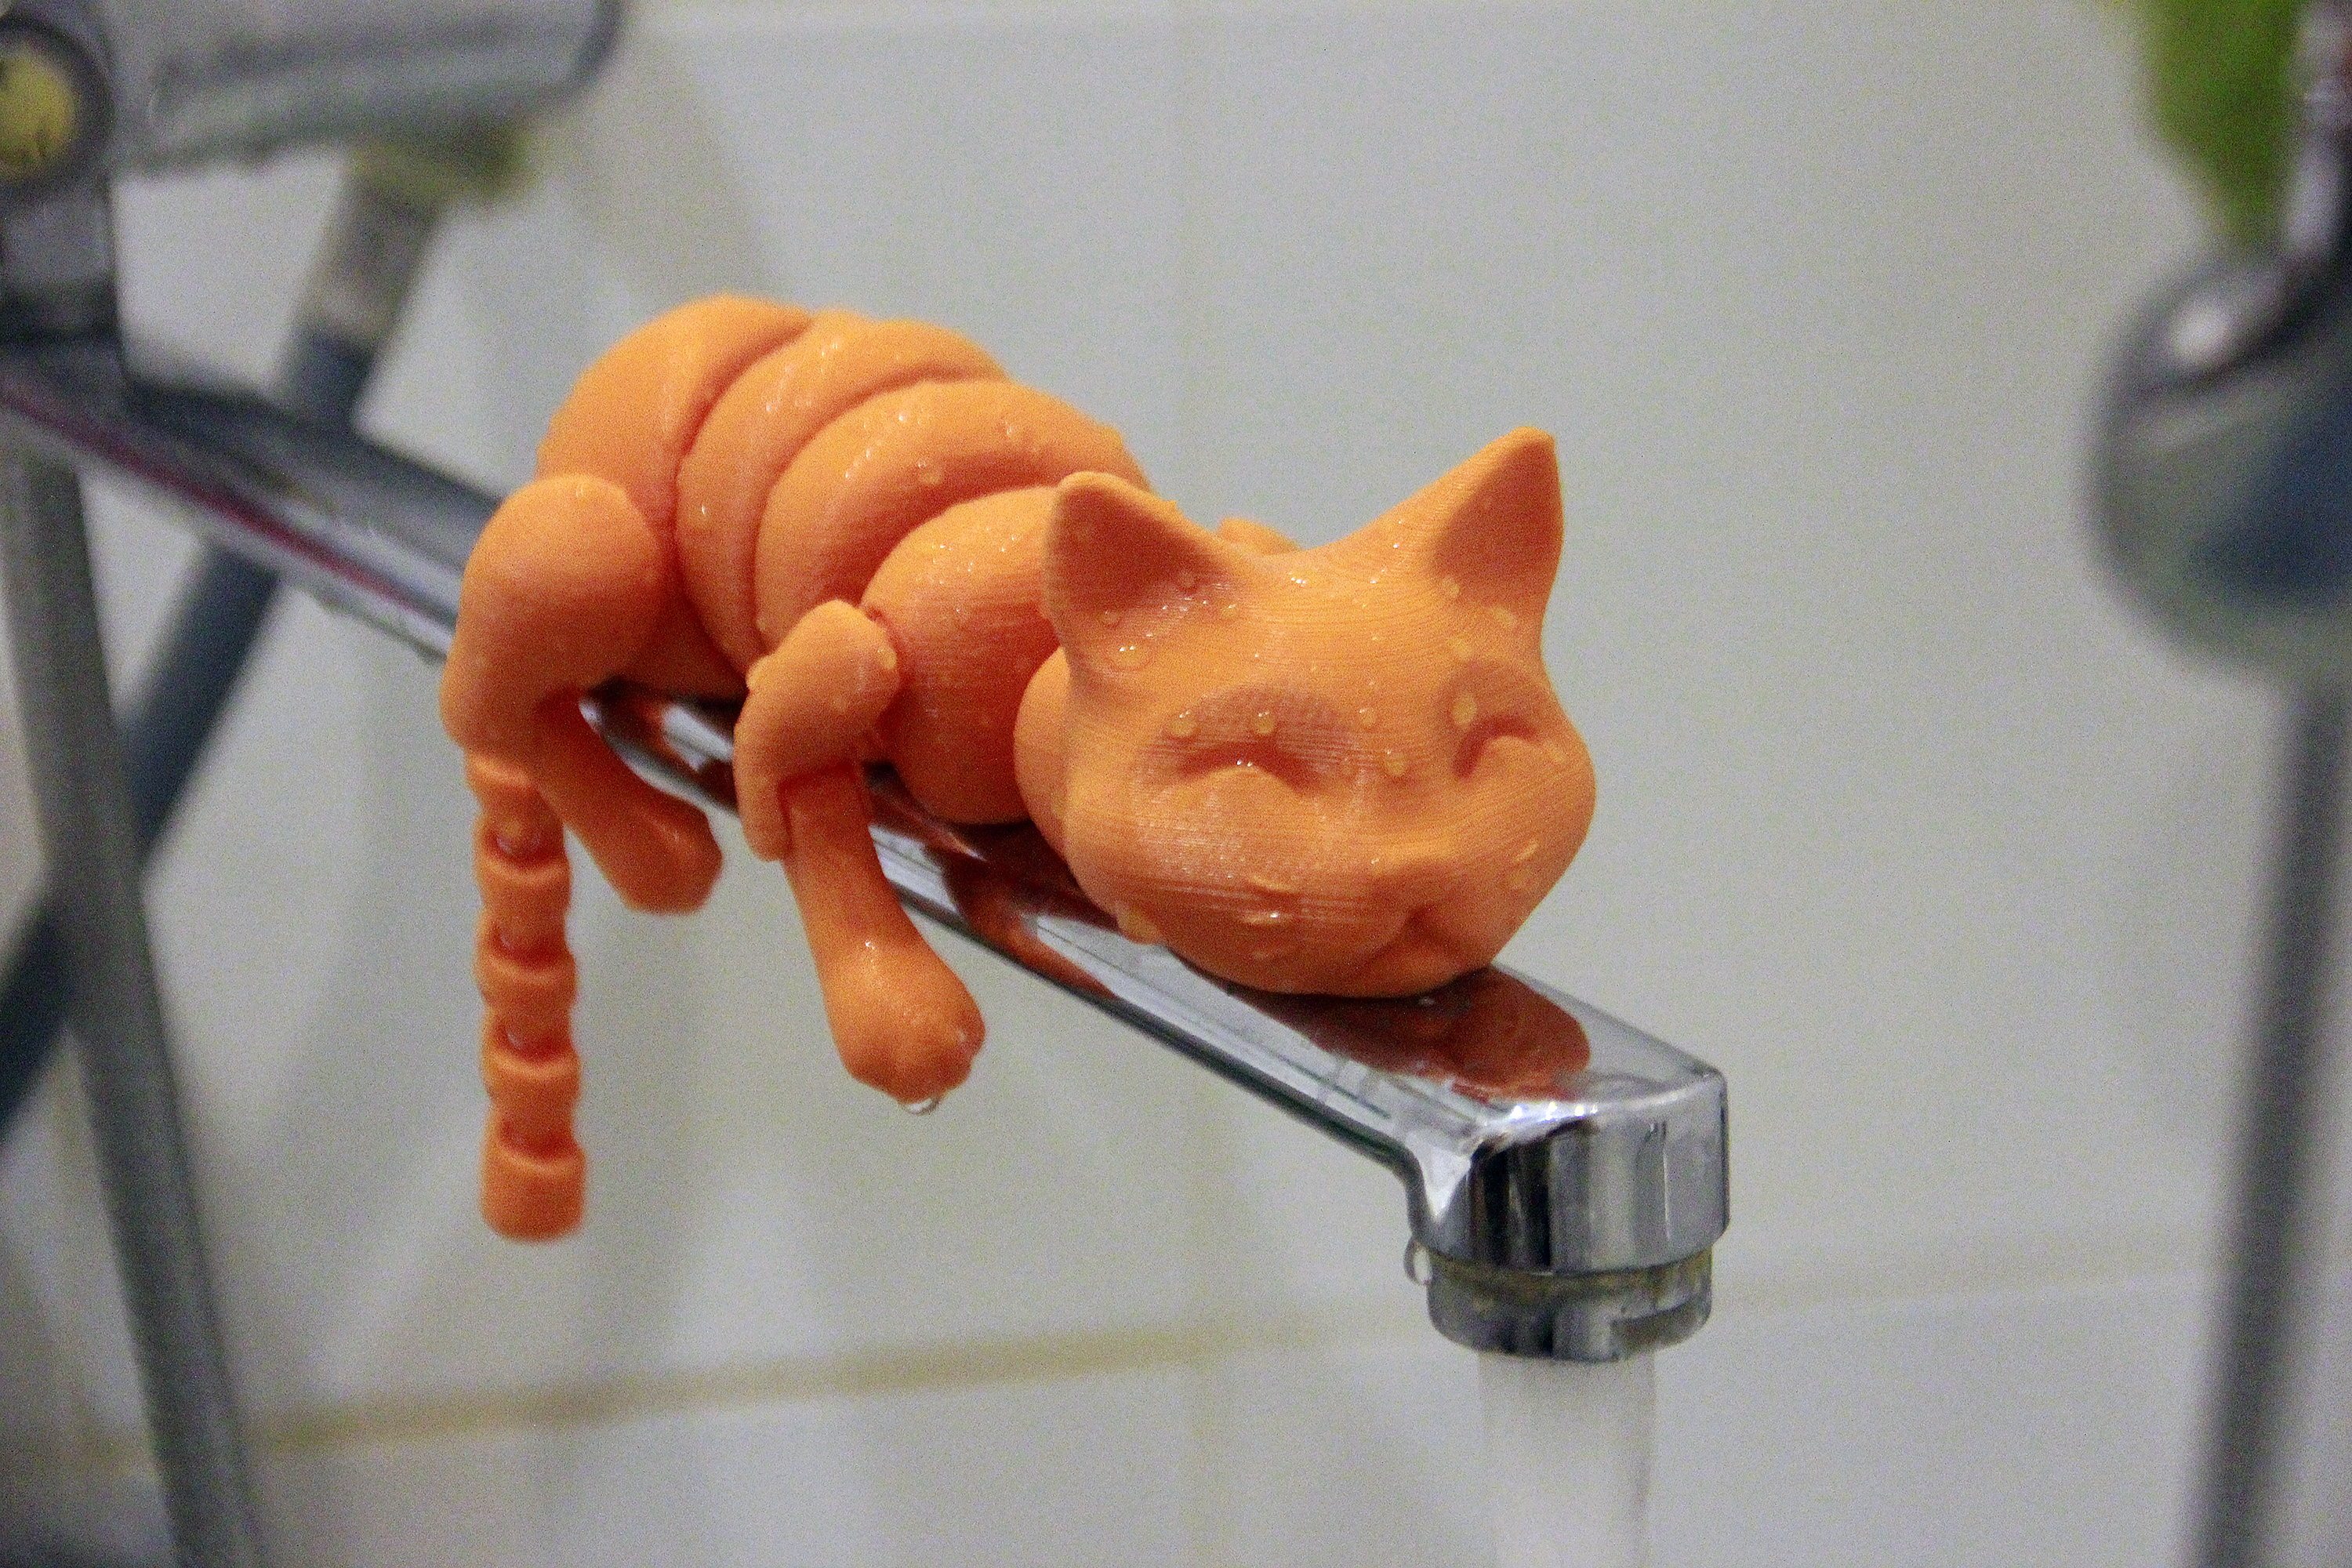  3D  Printable Lazy  Cat  by McGybeer